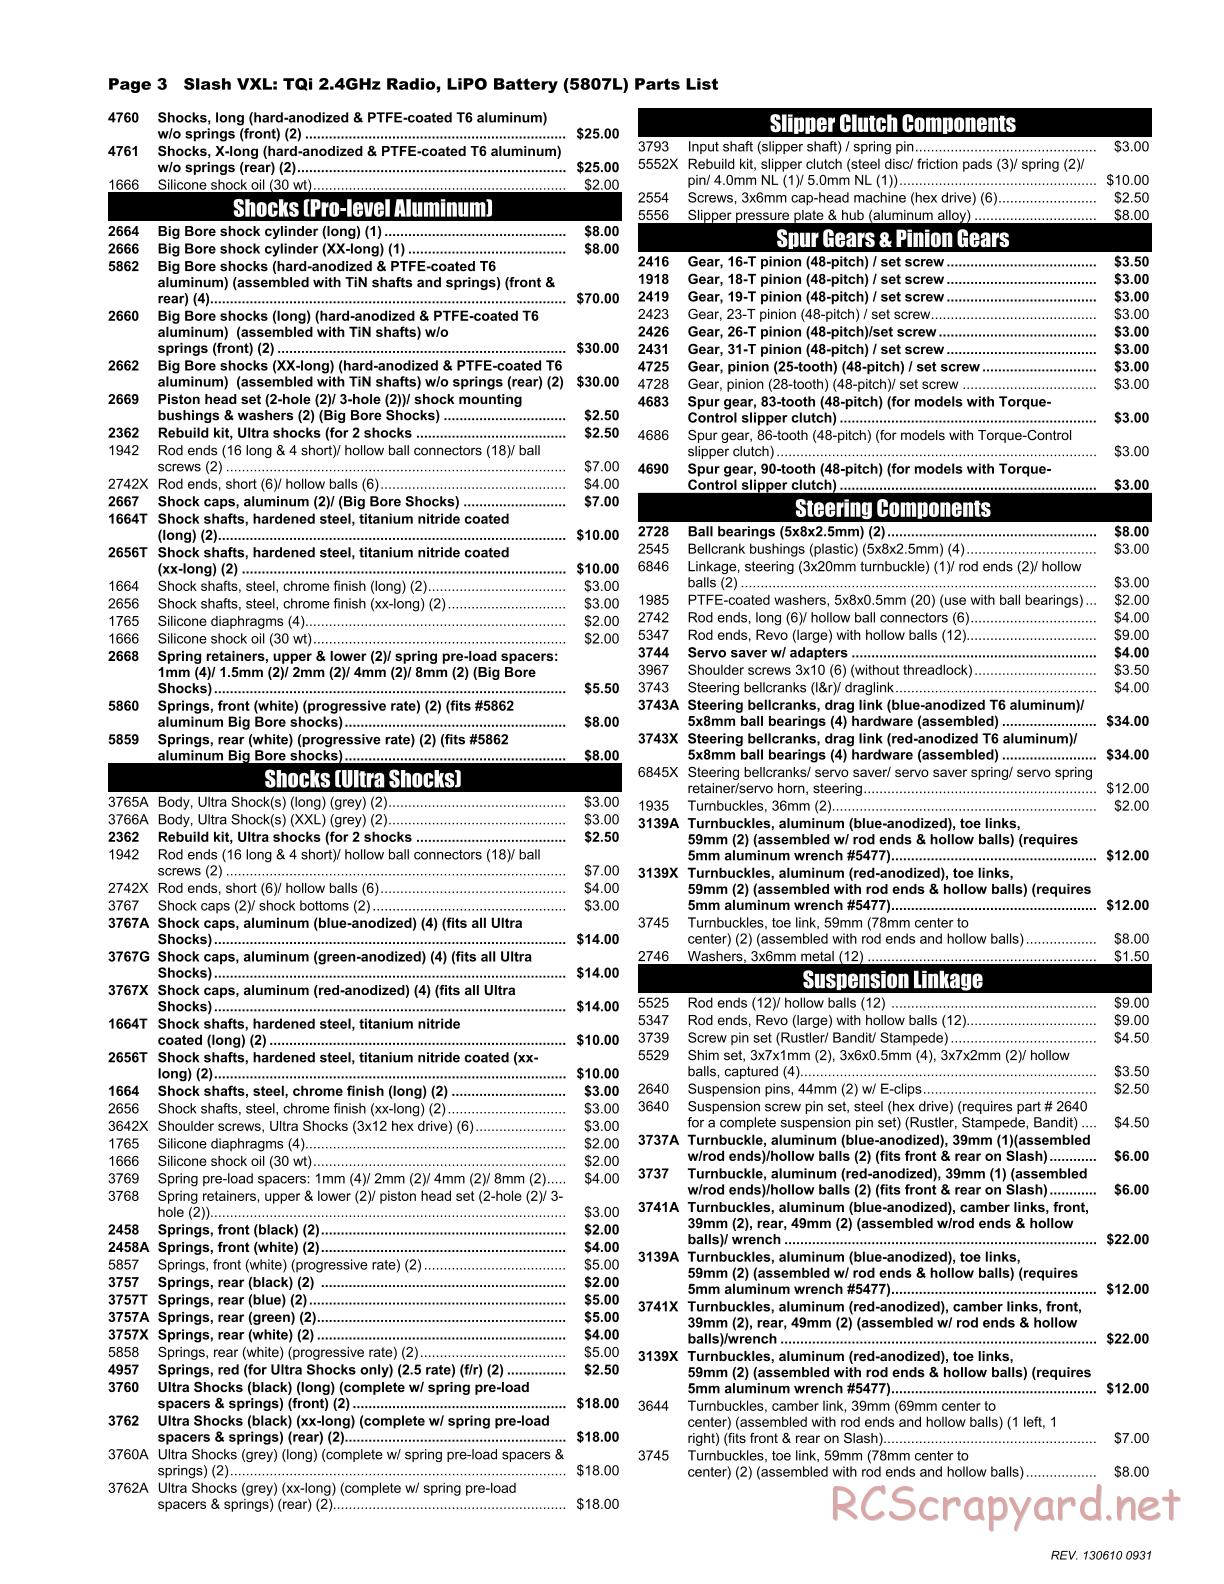 Traxxas - Slash 2WD VXL LiPo (2012) - Parts List - Page 3